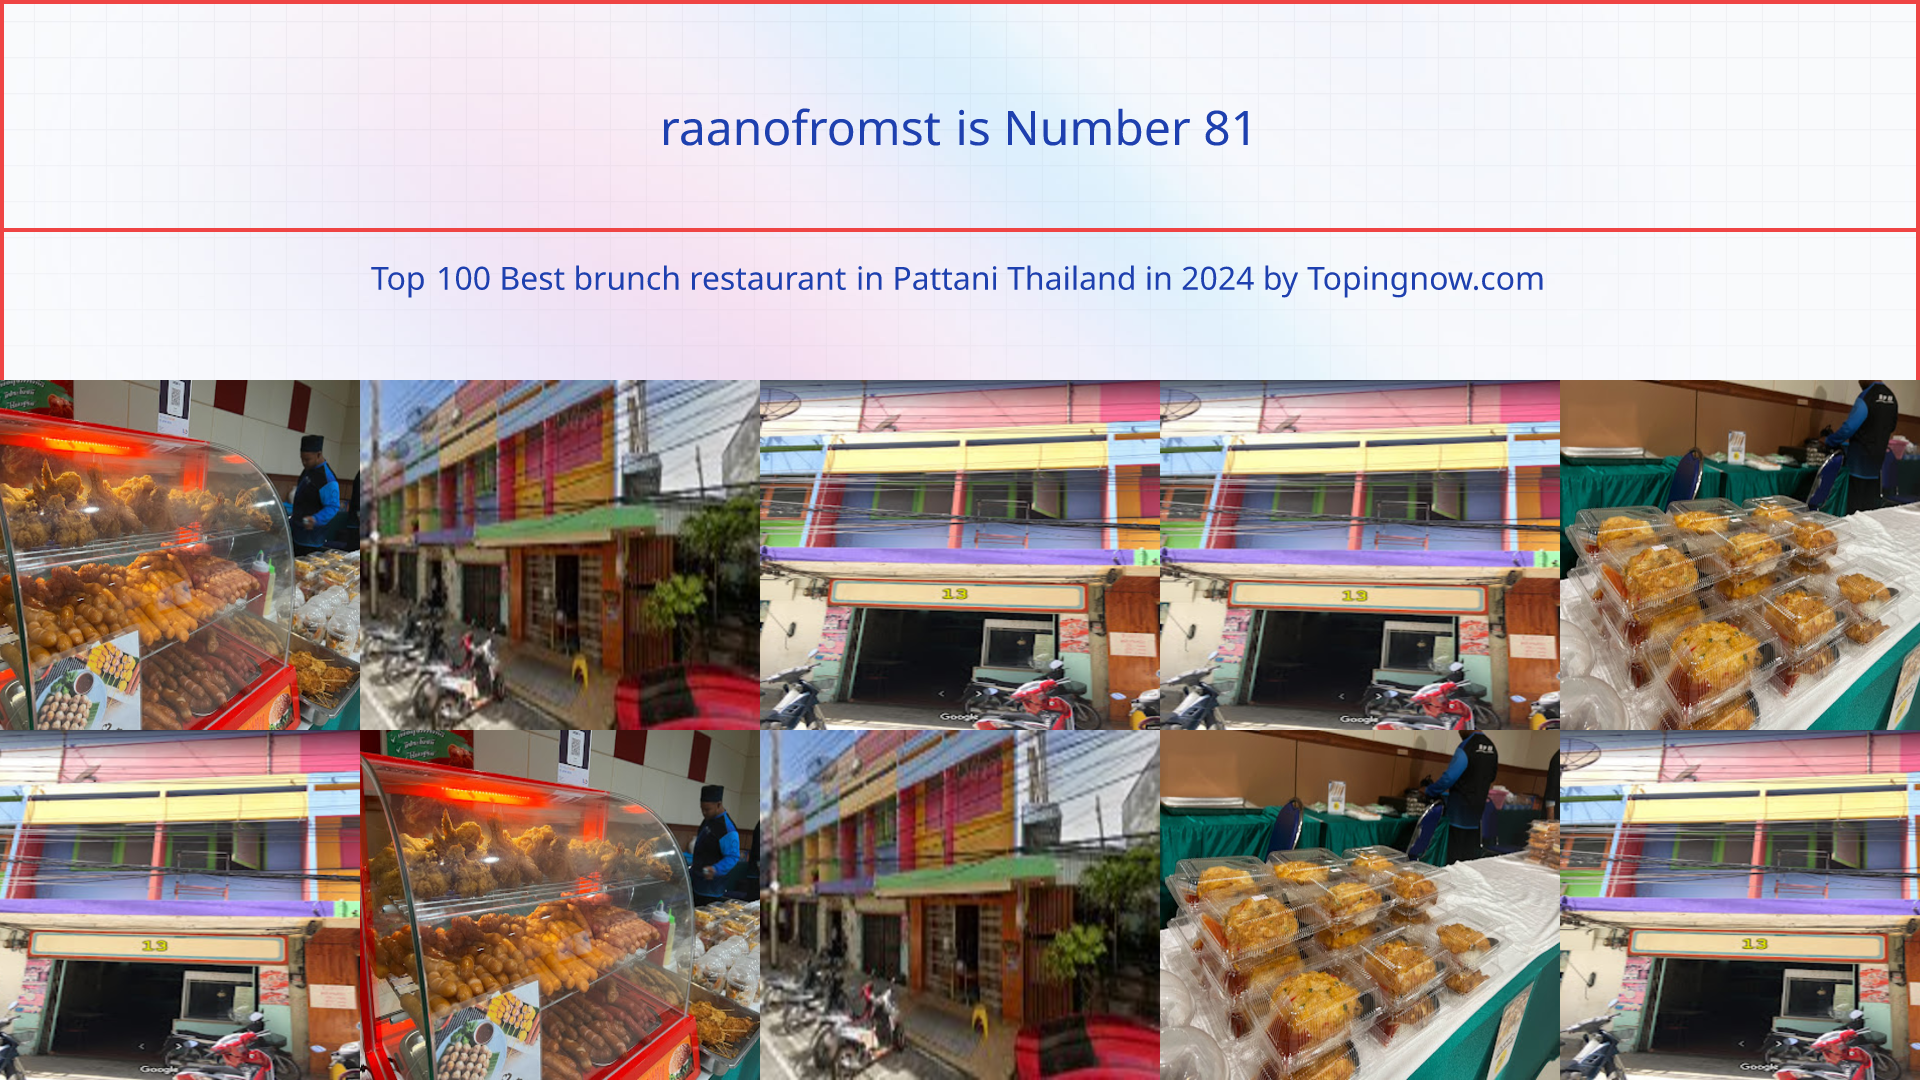 raanofromst: Top 100 Best brunch restaurant in Pattani Thailand in 2024